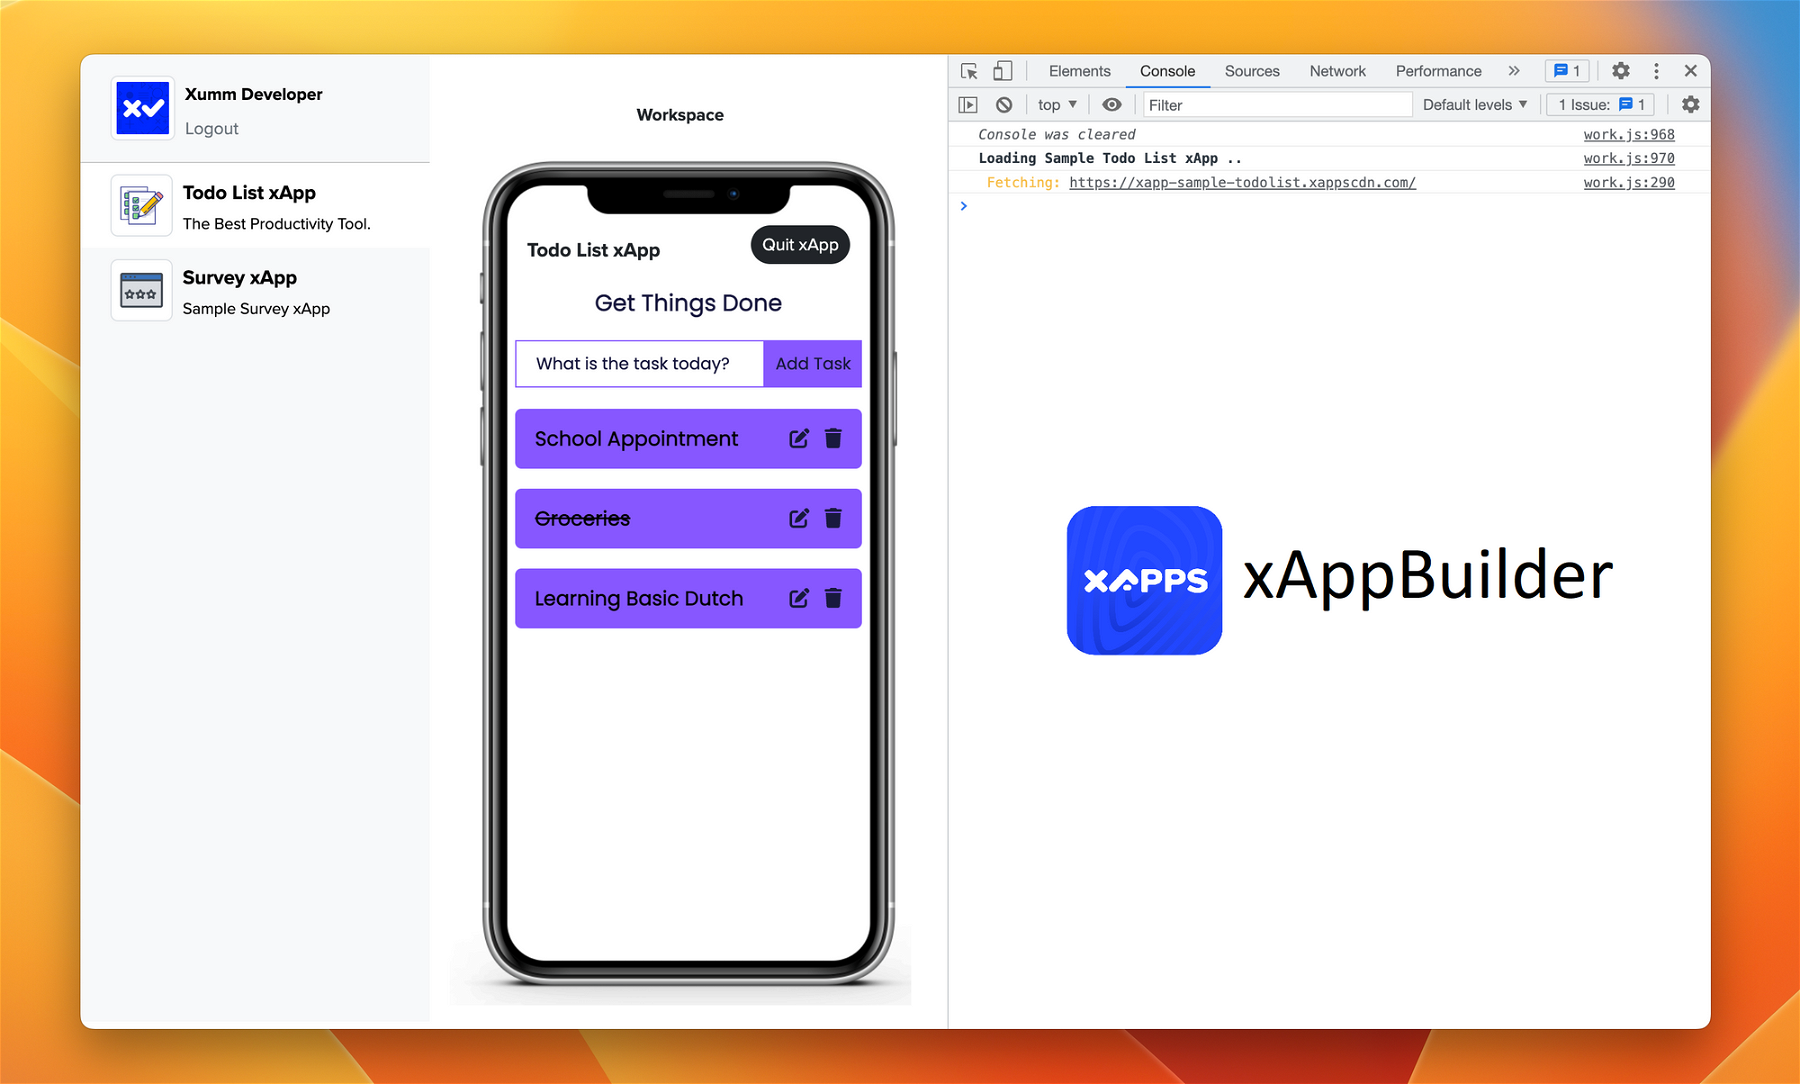 The demo xApp page in xAppBuilder.